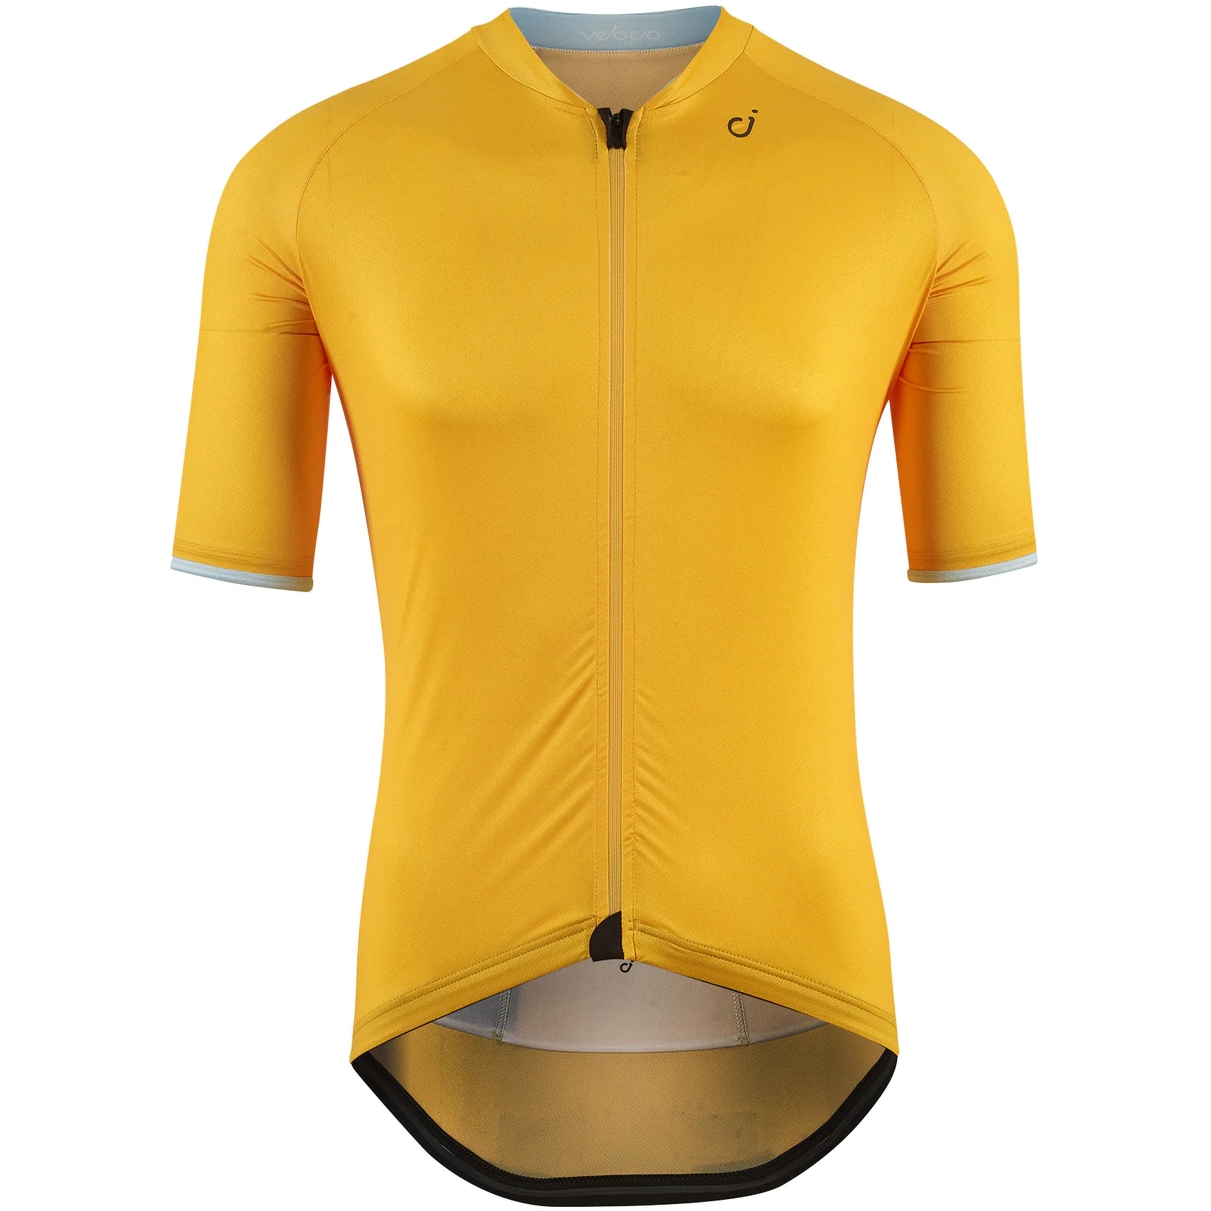 https://images.bike24.com/i/mb/cc/dc/93/velocio-mens-signature-jersey-mango-1-1193246.jpg